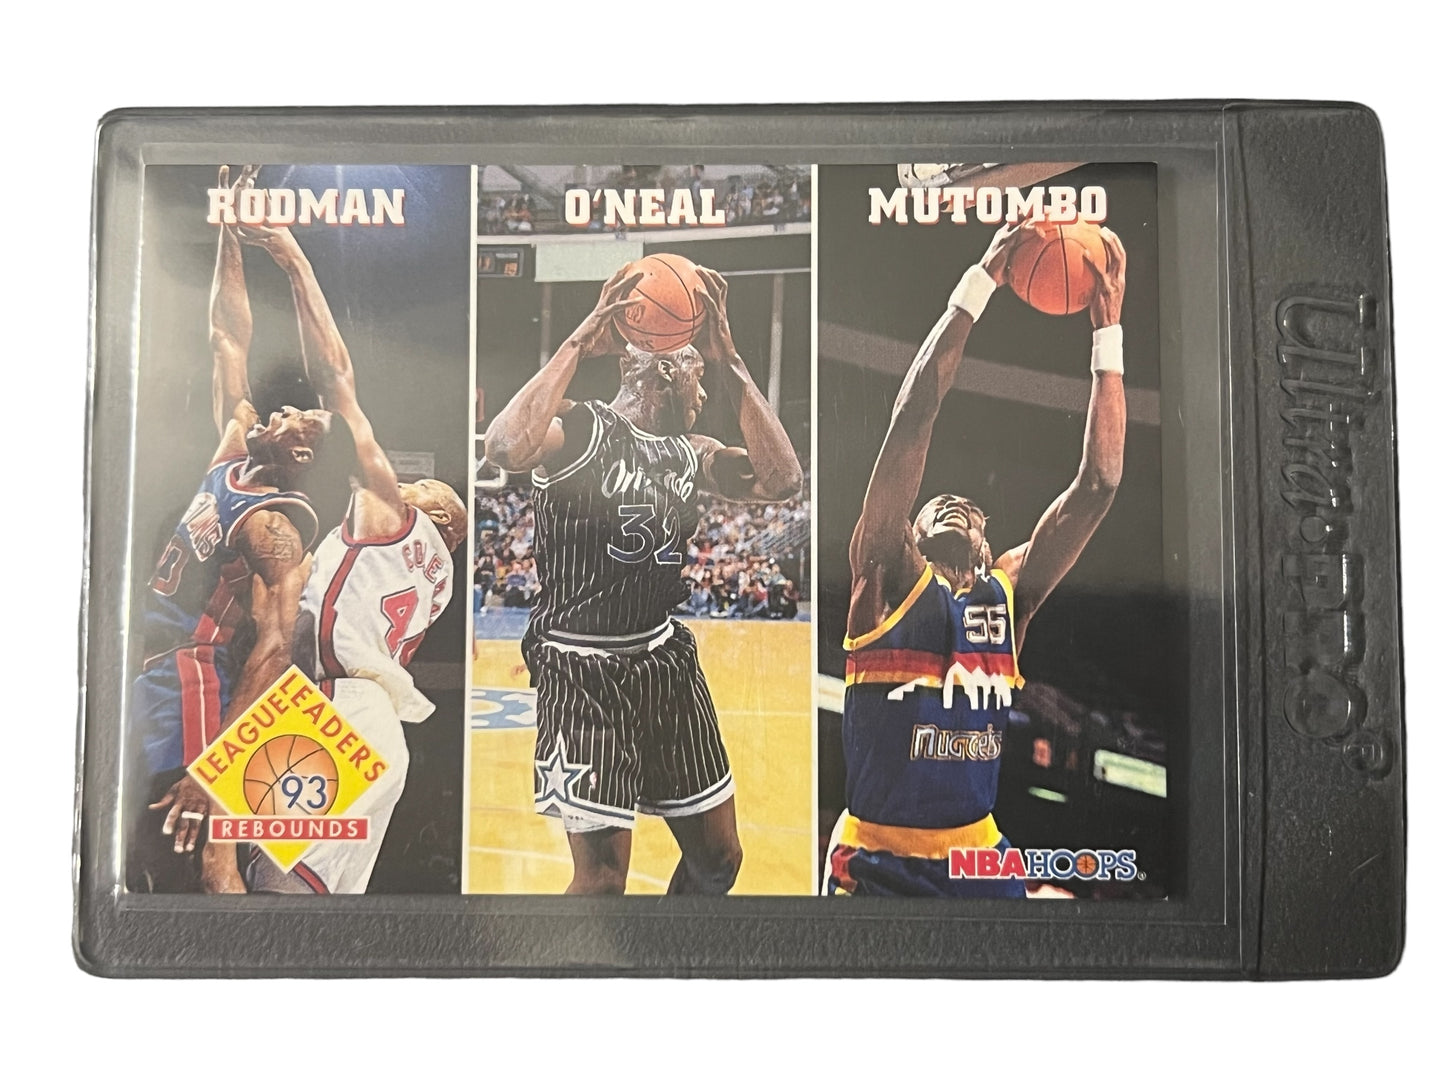 1993 Skybox League Leaders Rebounds Rodman Shaq O'Neal Mutombo #284 Card